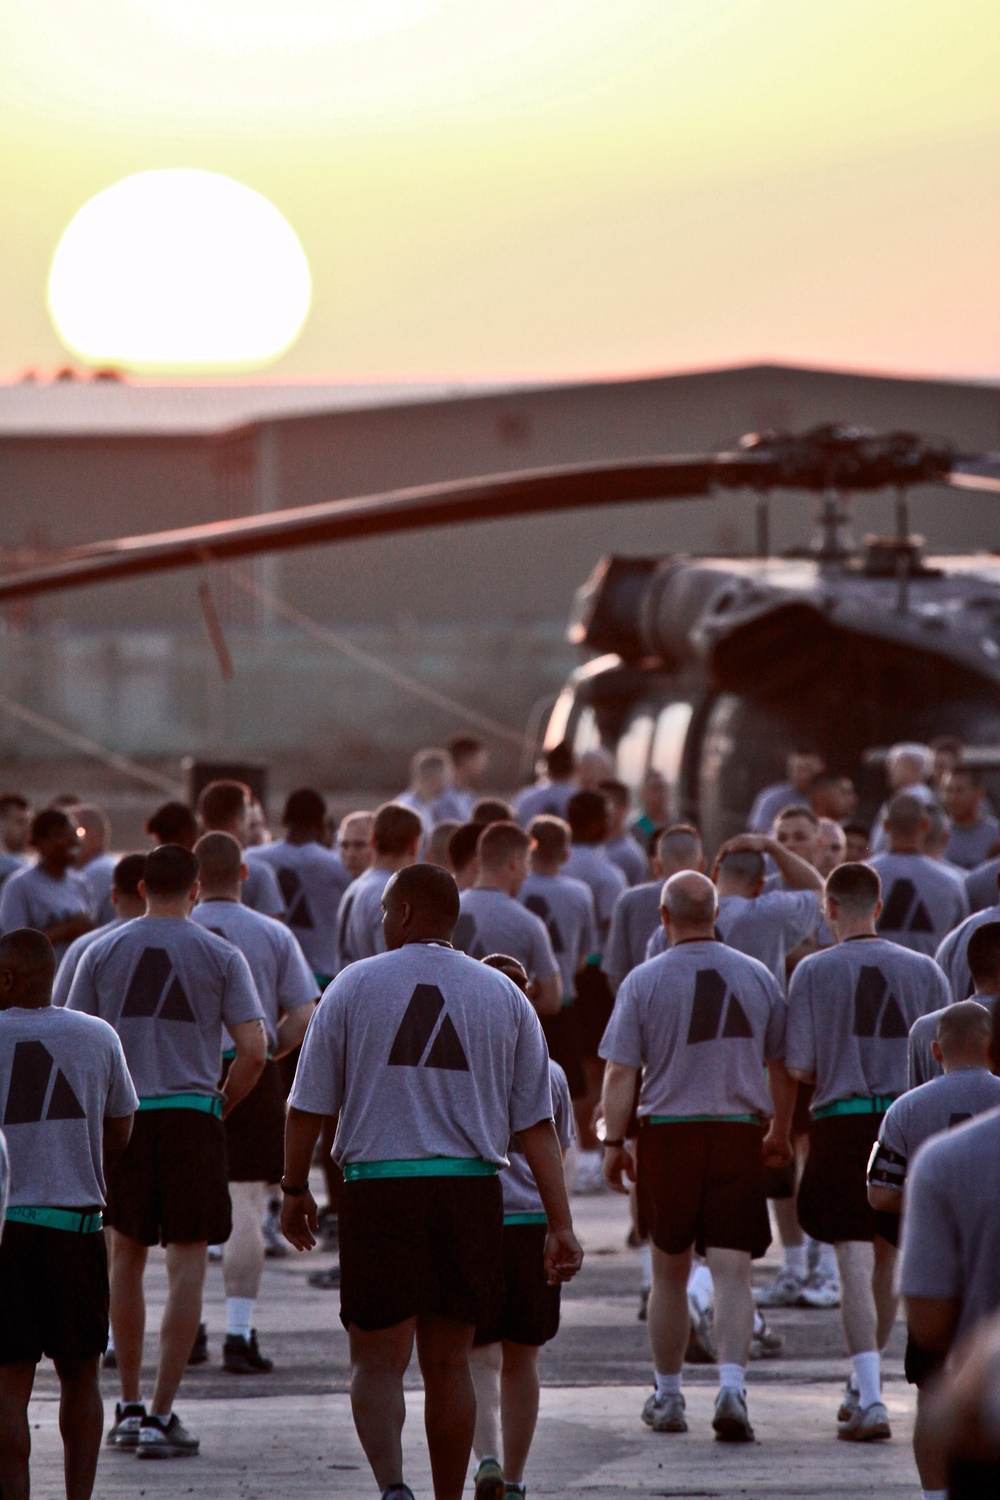 Air Cav NCOs build team spirit, pride with morning run